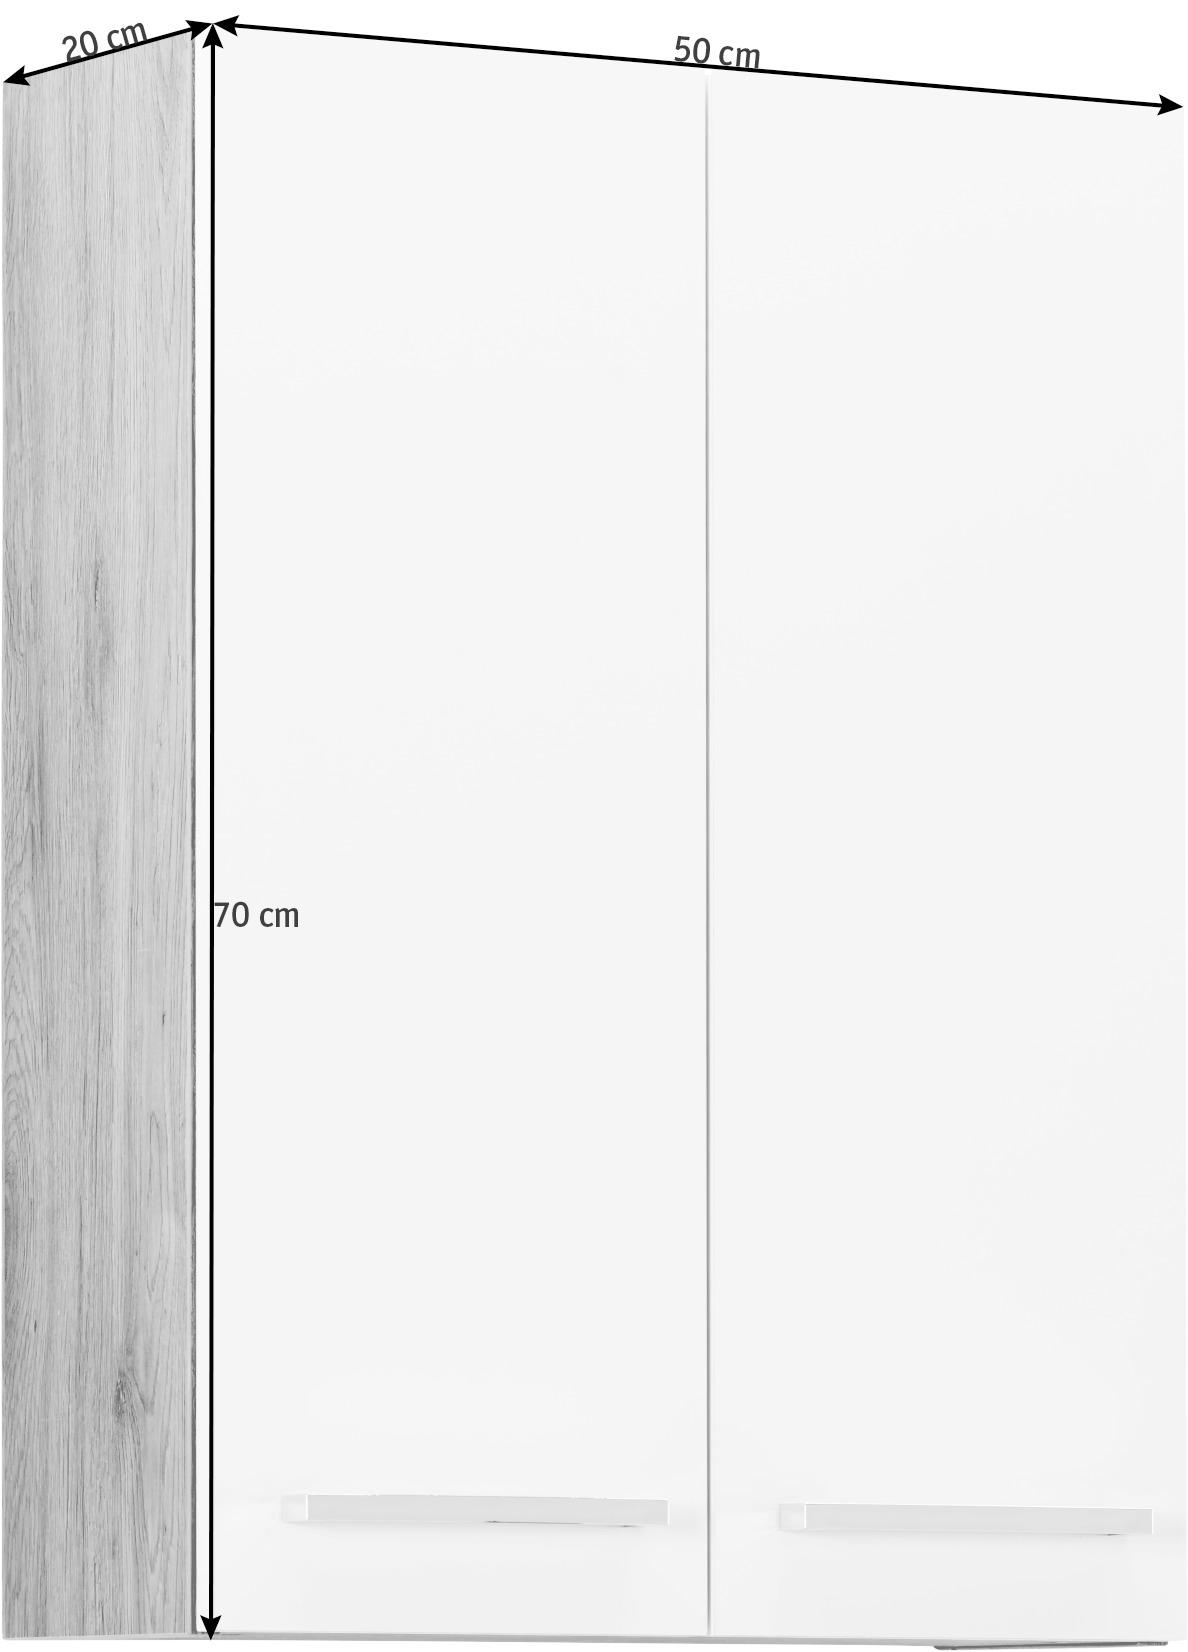 ZÁVĚSNÁ SKŘÍŇKA, barvy dubu, 50/70/20 cm - bílá/barvy dubu, Design, kov/kompozitní dřevo (50/70/20cm) - Xora